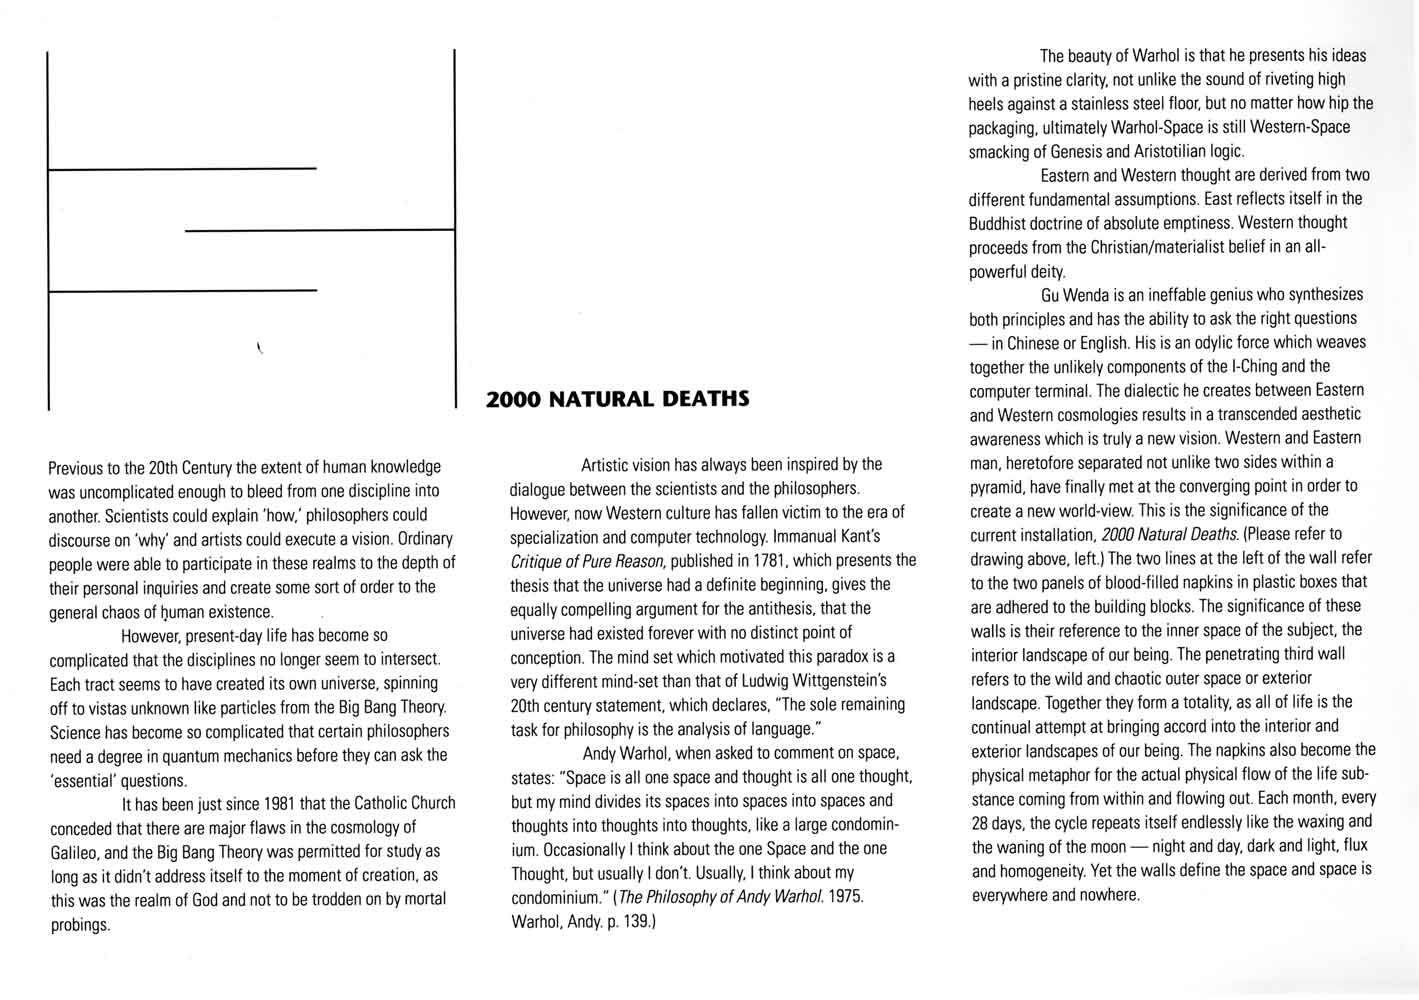 2000 Natural Deaths, catalog, pg 1